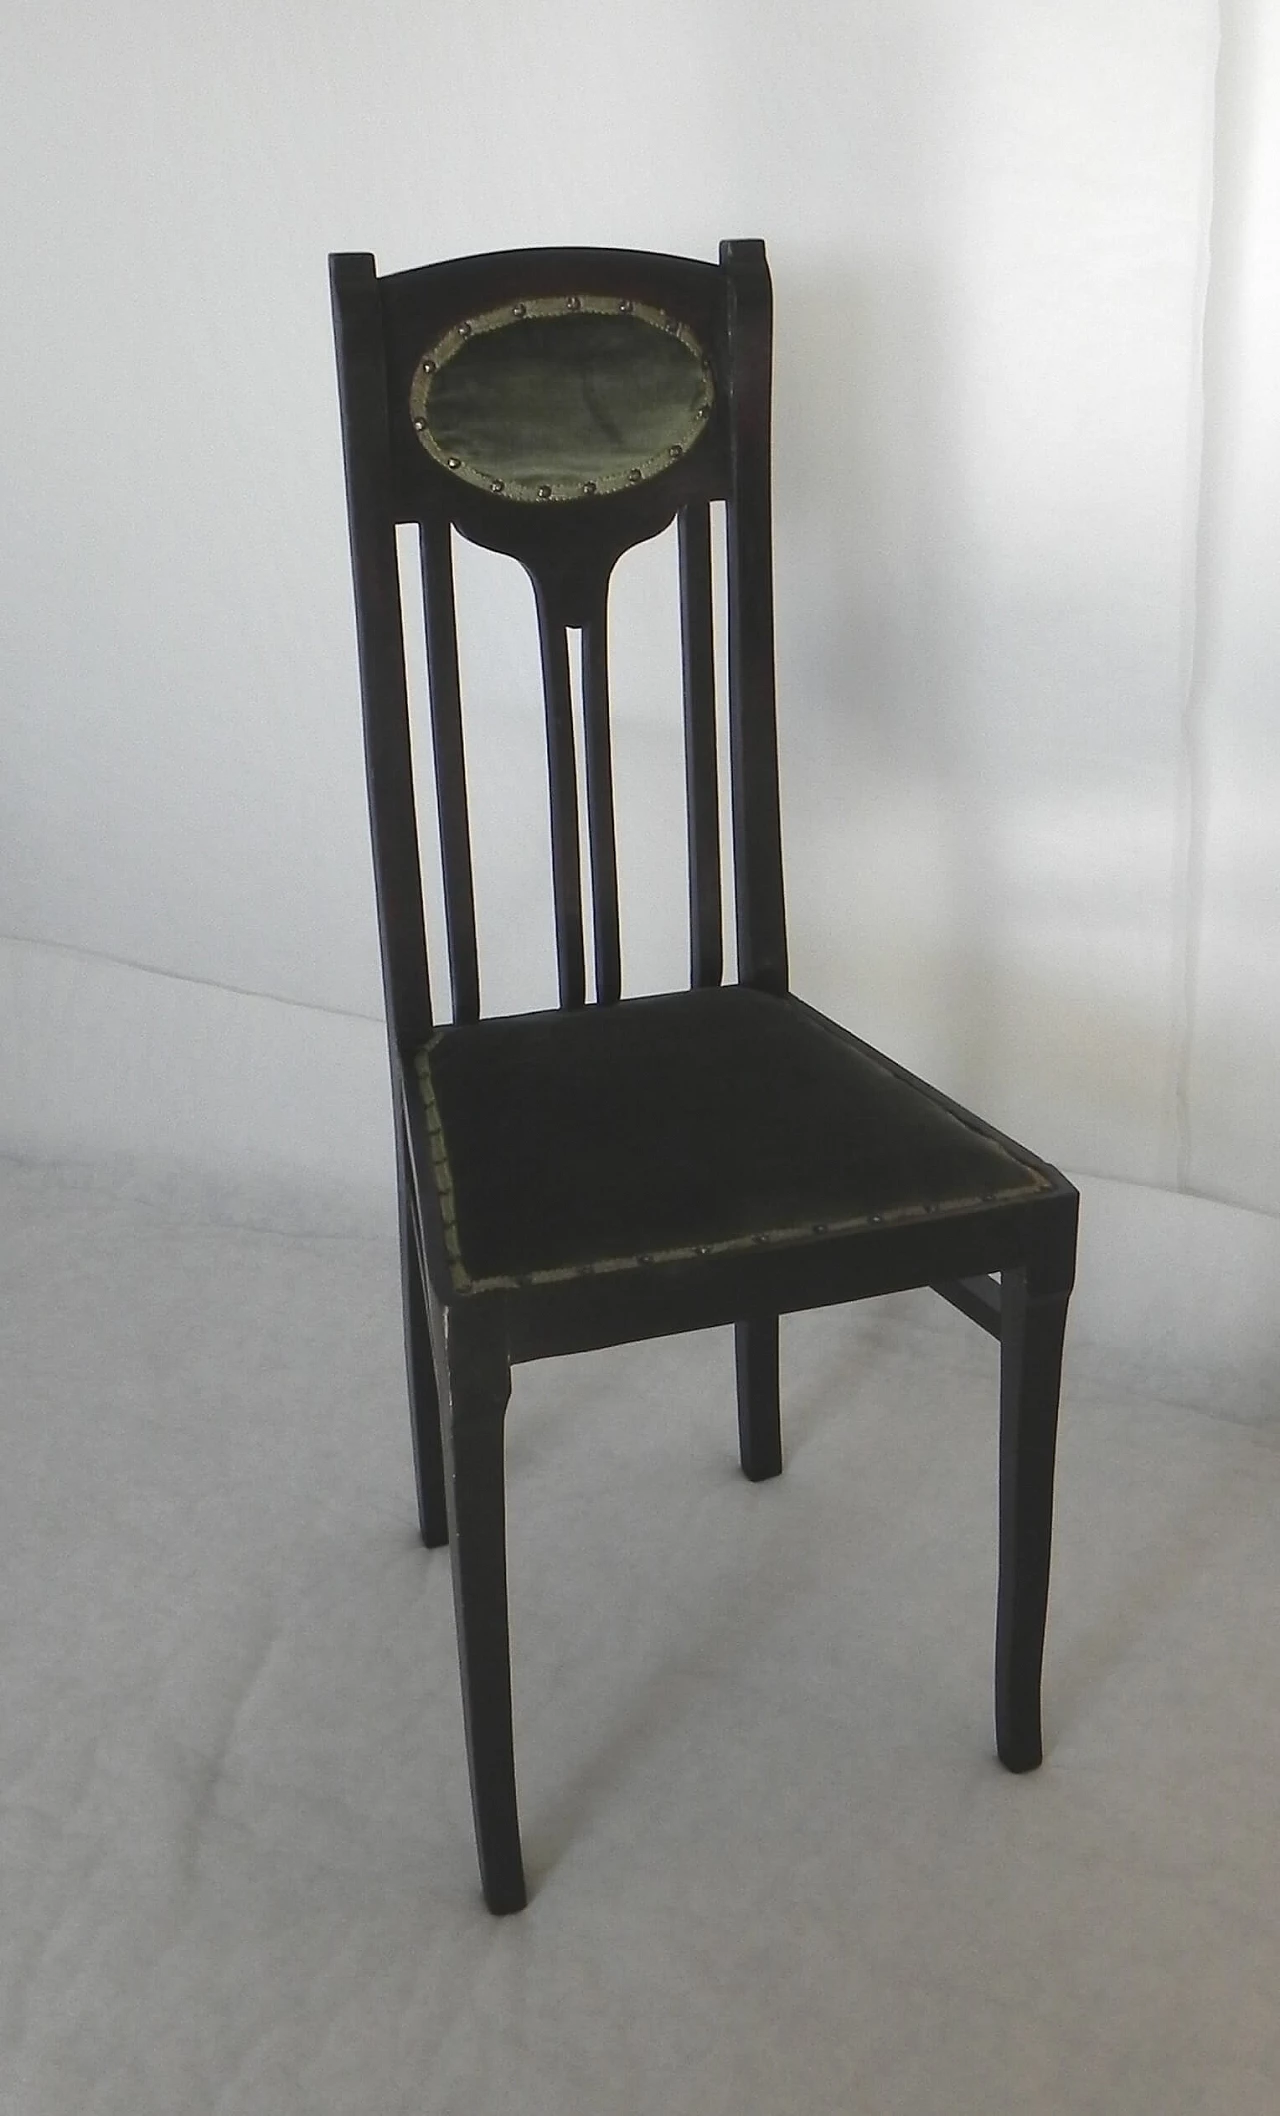 Mackintosh style chair, 1920s 1283313